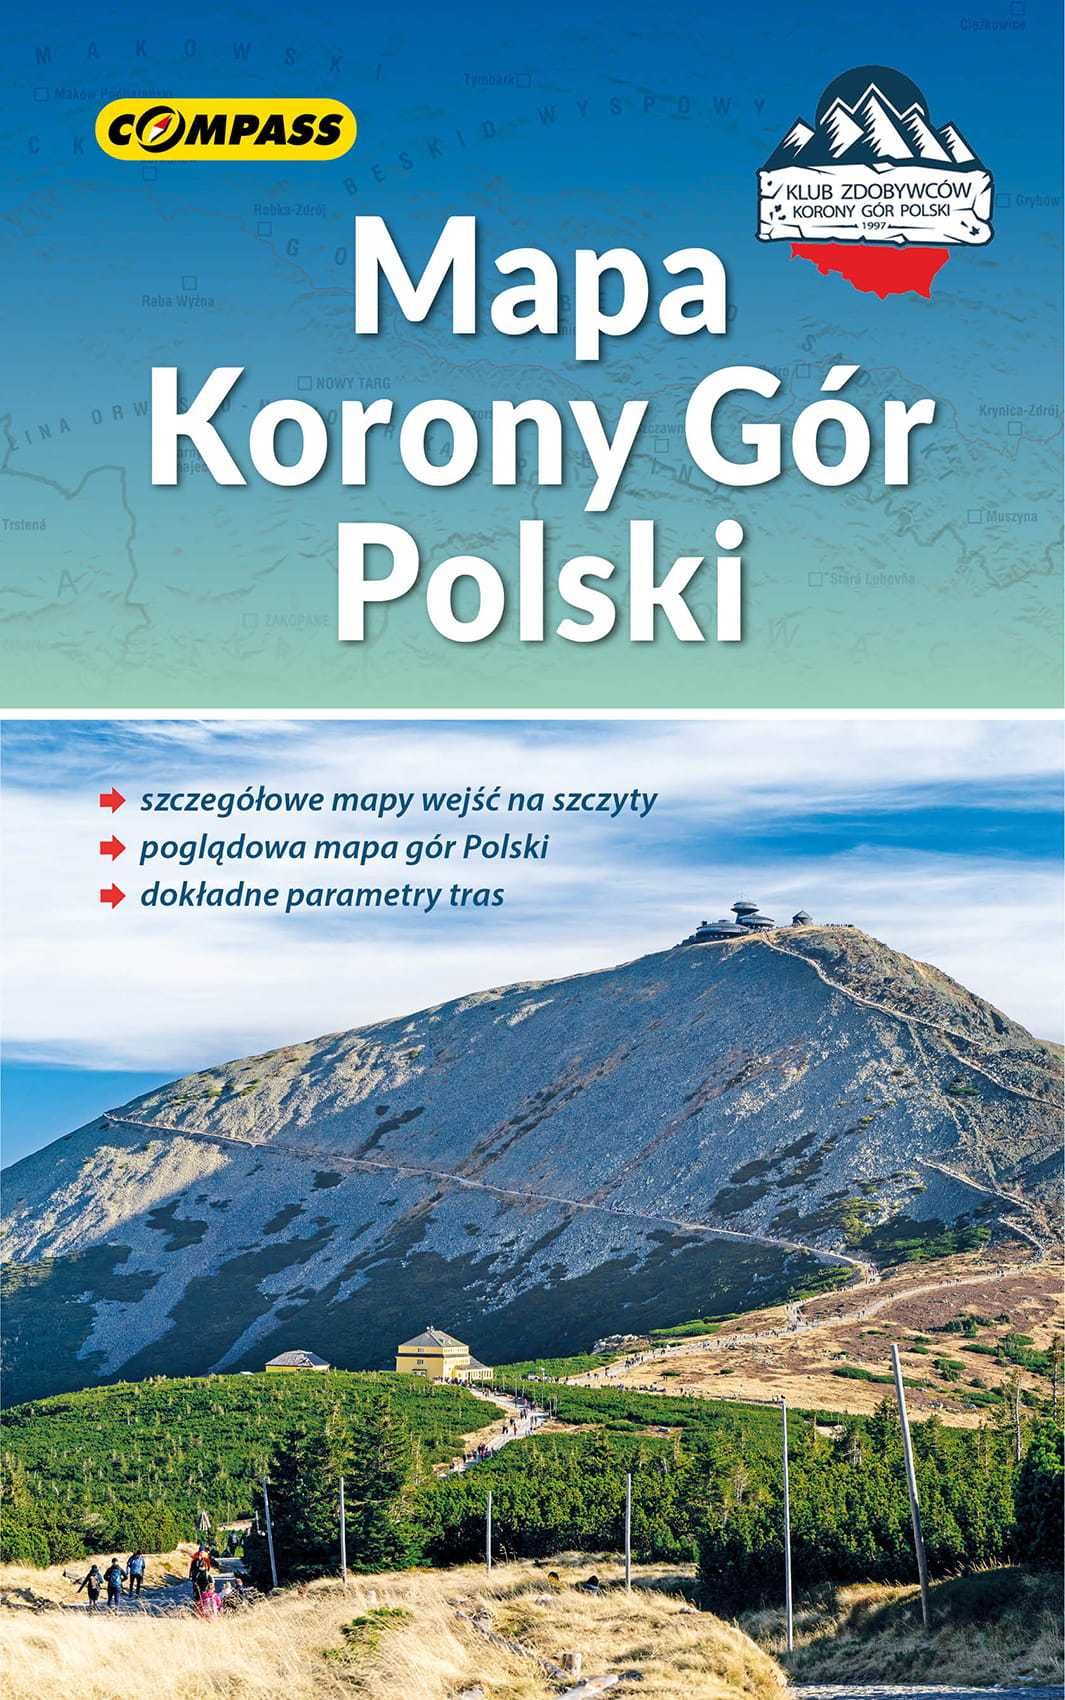 MAPA Korony Korona Gór Polski COMPASS